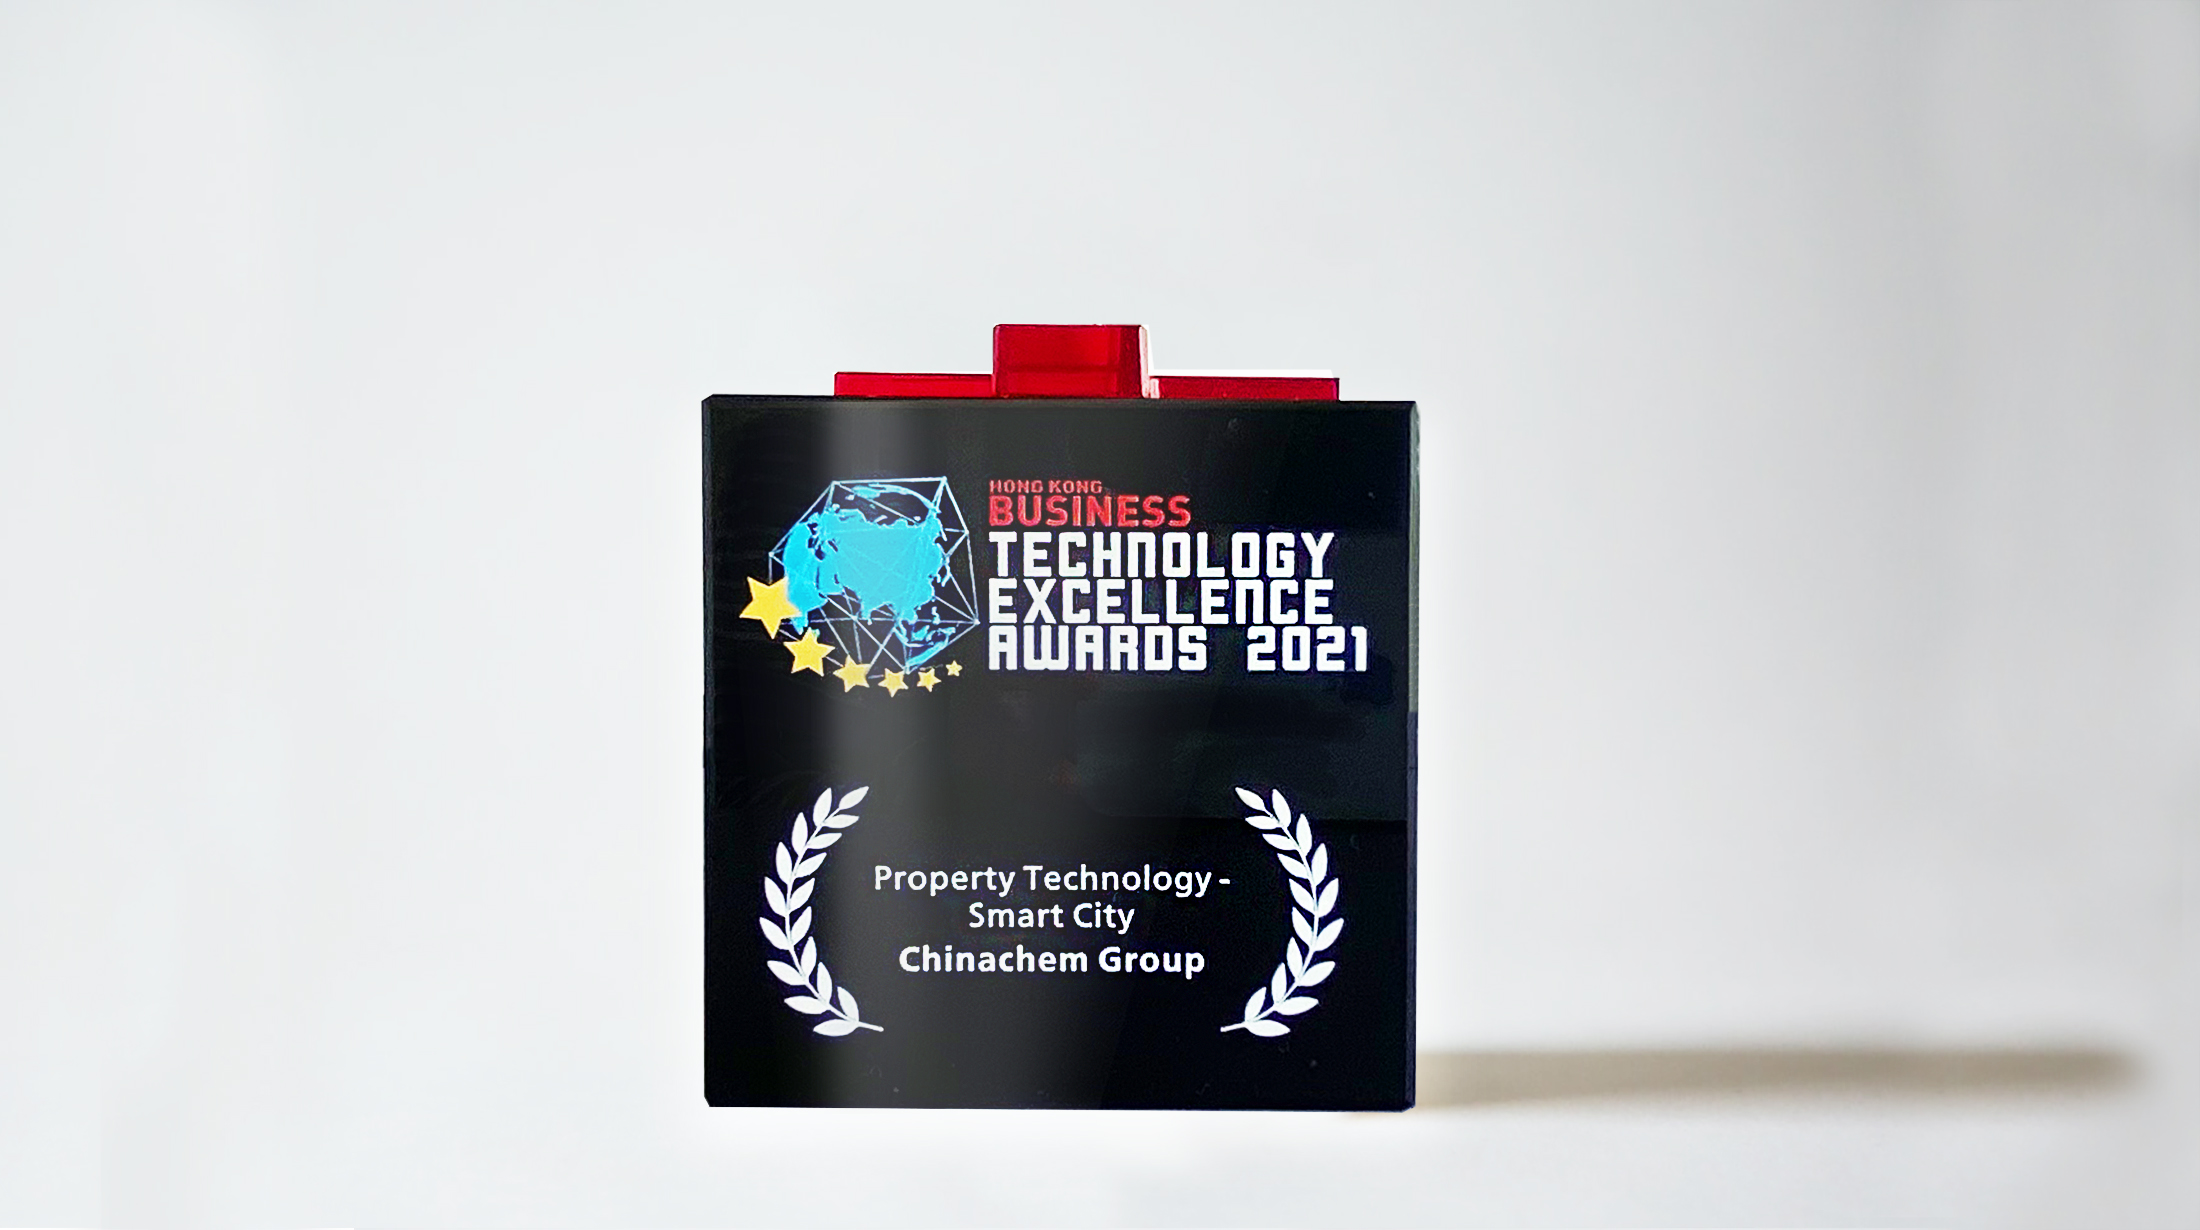 Chinachem Group - Hong Kong Business Technology Excellence Awards 2021: Prop Tech - Smart City